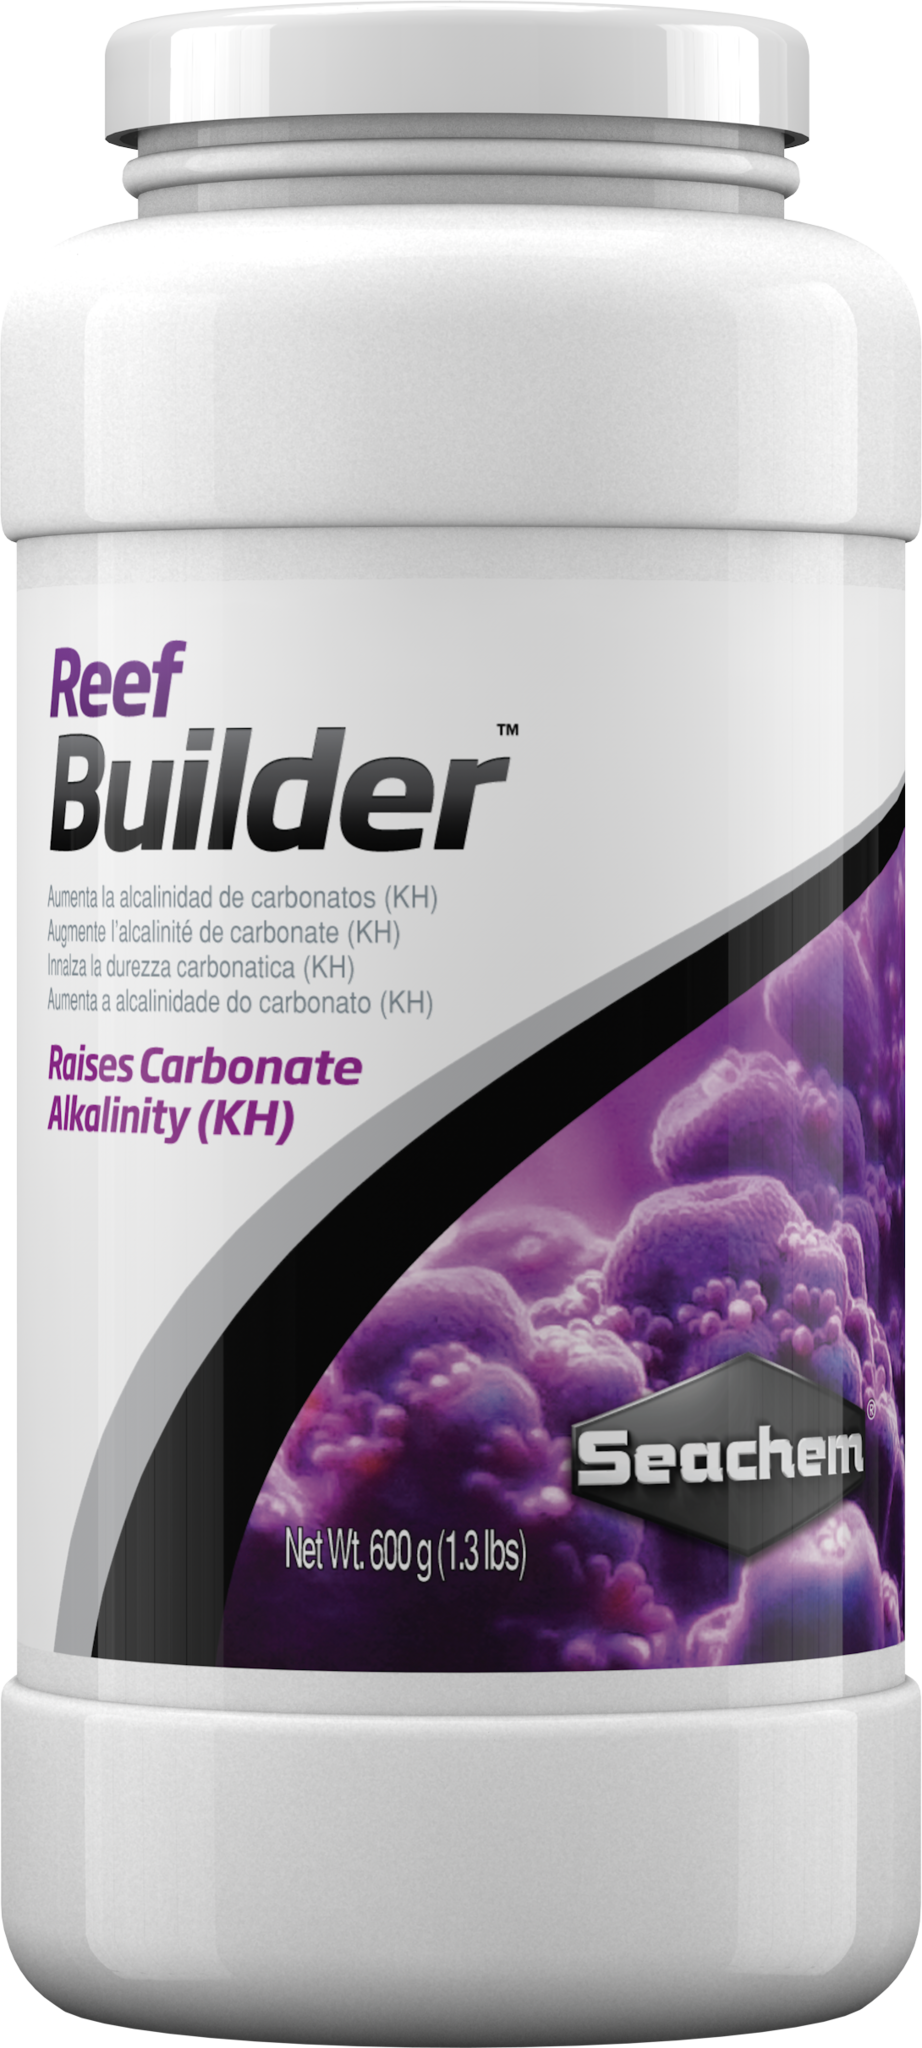 Seachem Reef Builder Seachem 500 gm